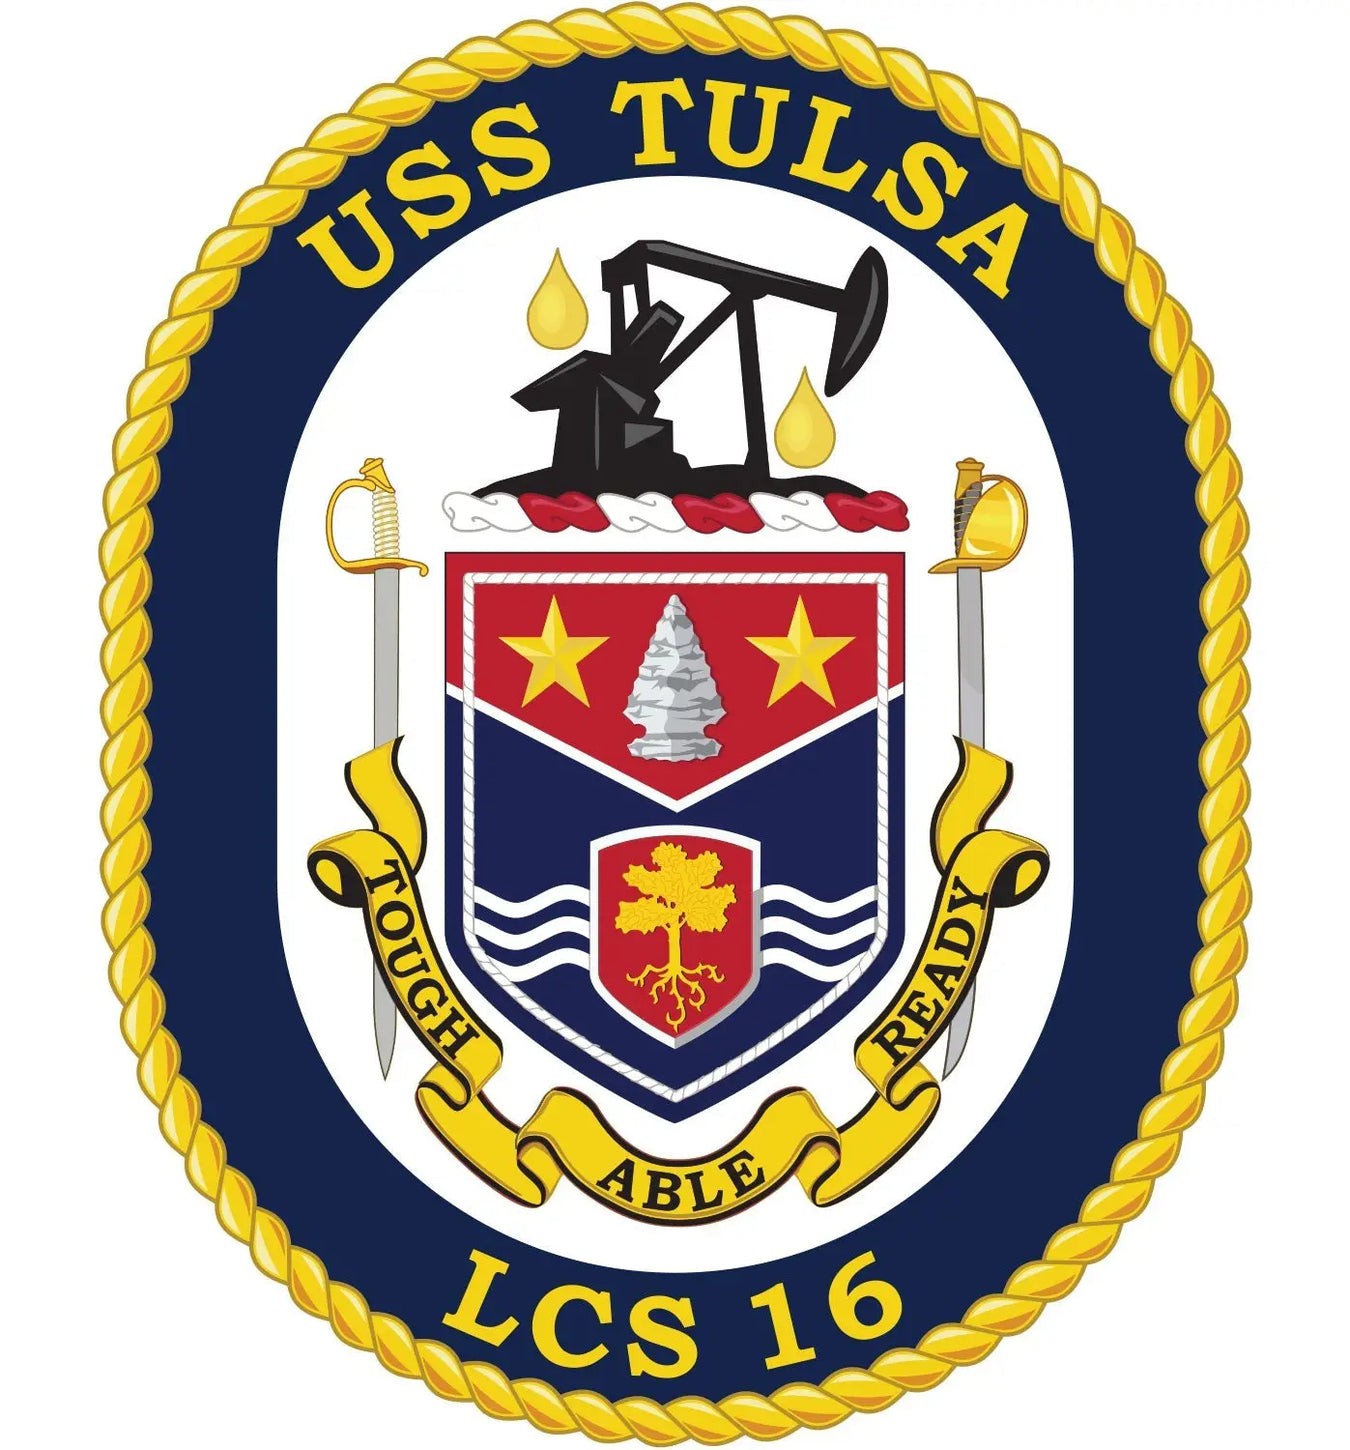 USS Tulsa (LCS-16)